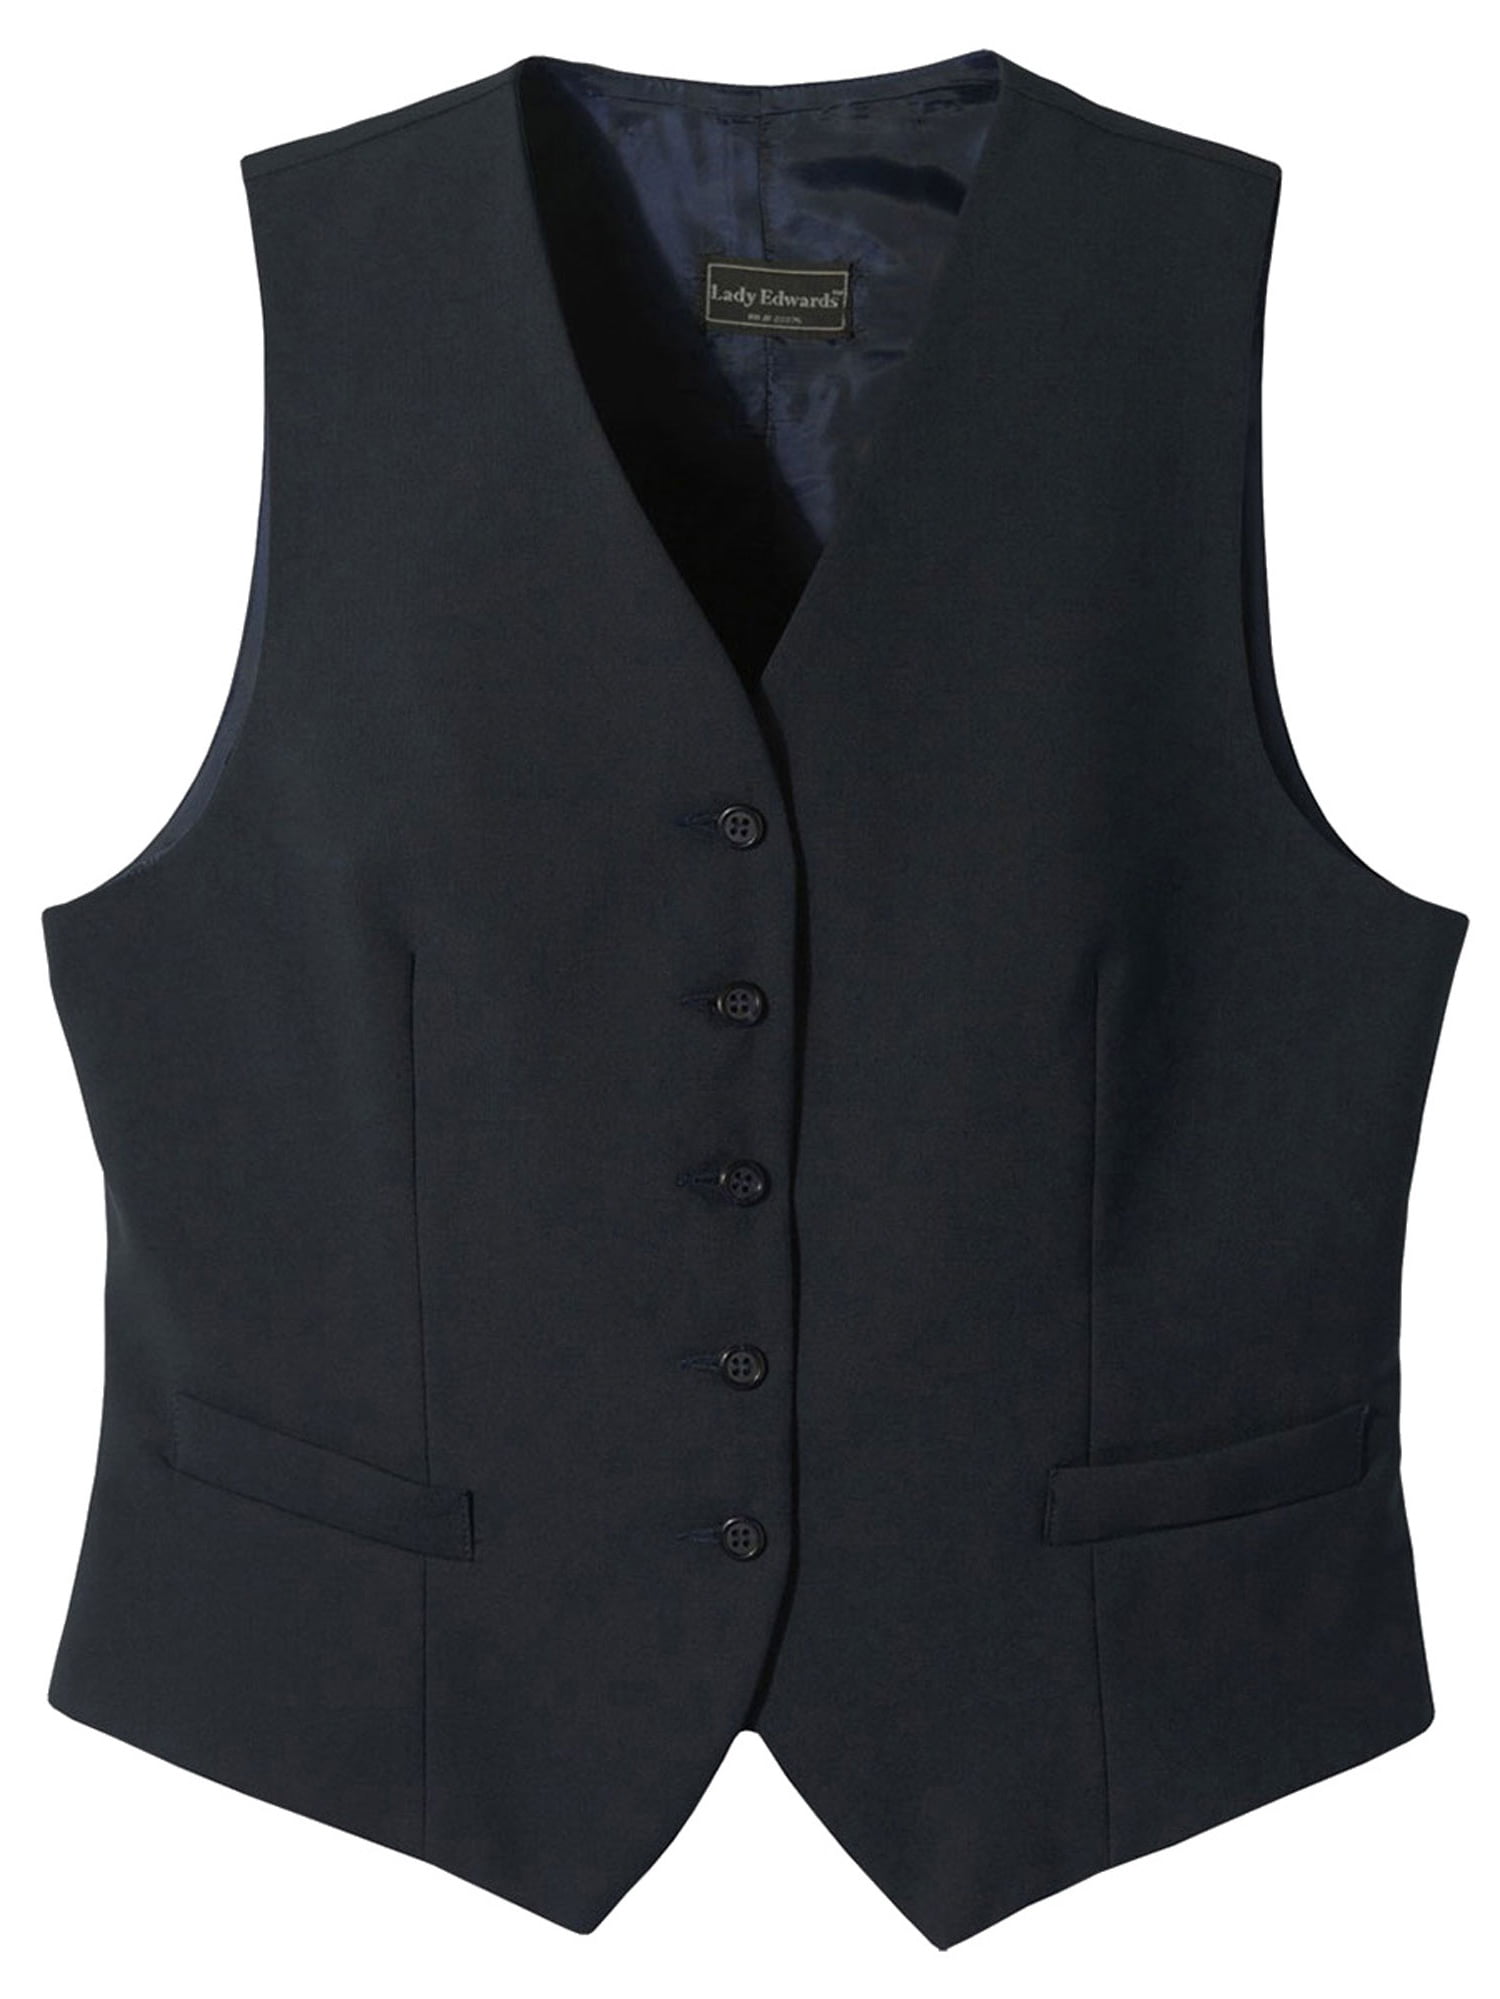 Ed Garments Women's five Button Dress Vest, NAVY, Medium - Walmart.com